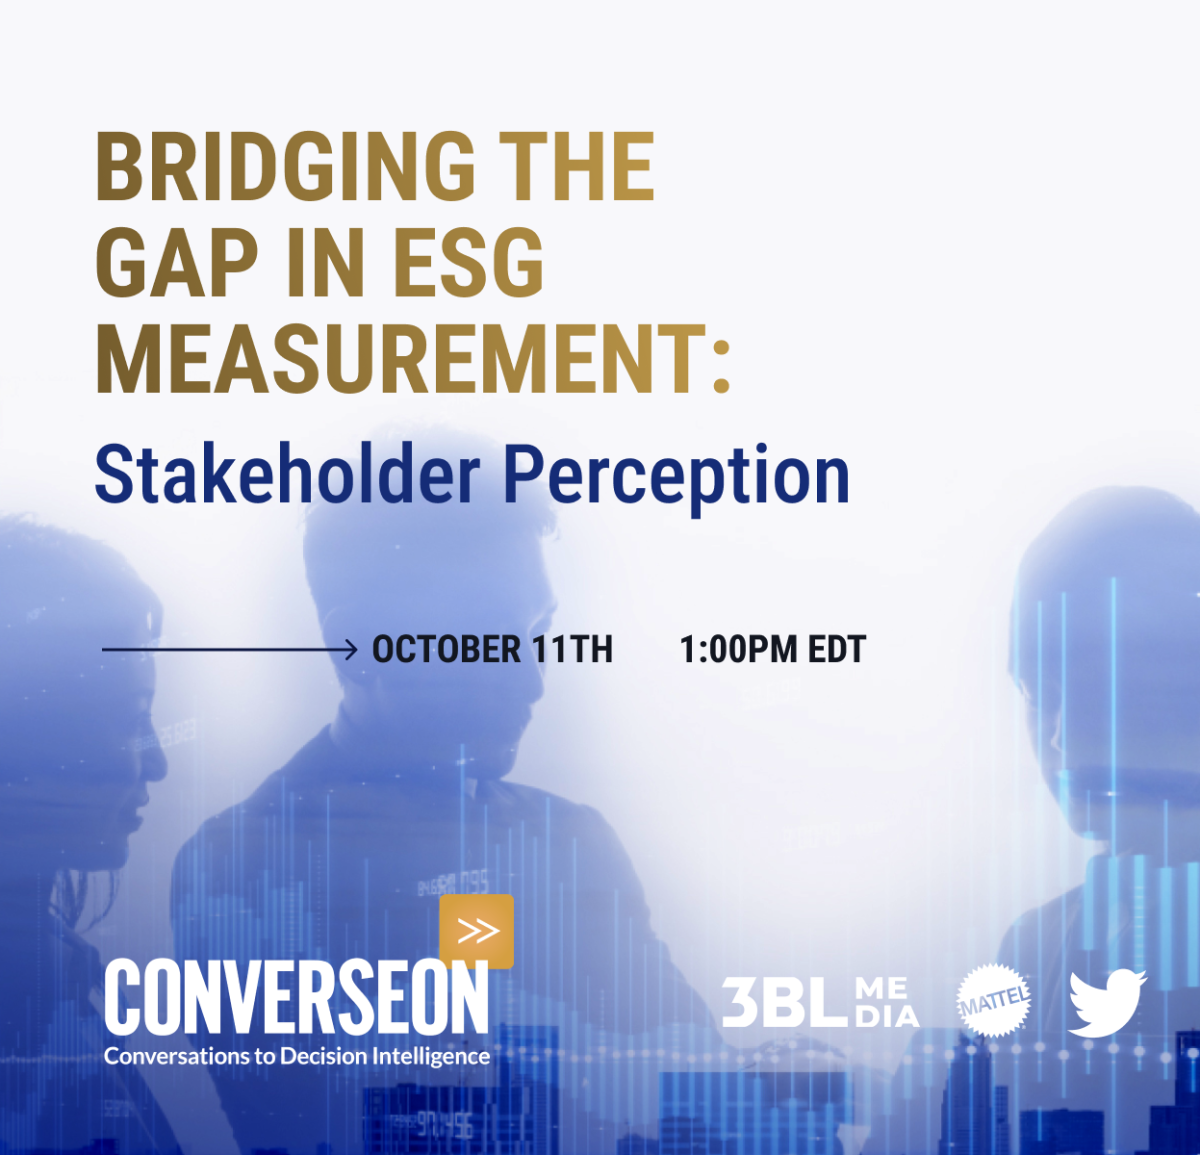 "Bridging the Gap in ESG Measurement: Stakeholder Perception"